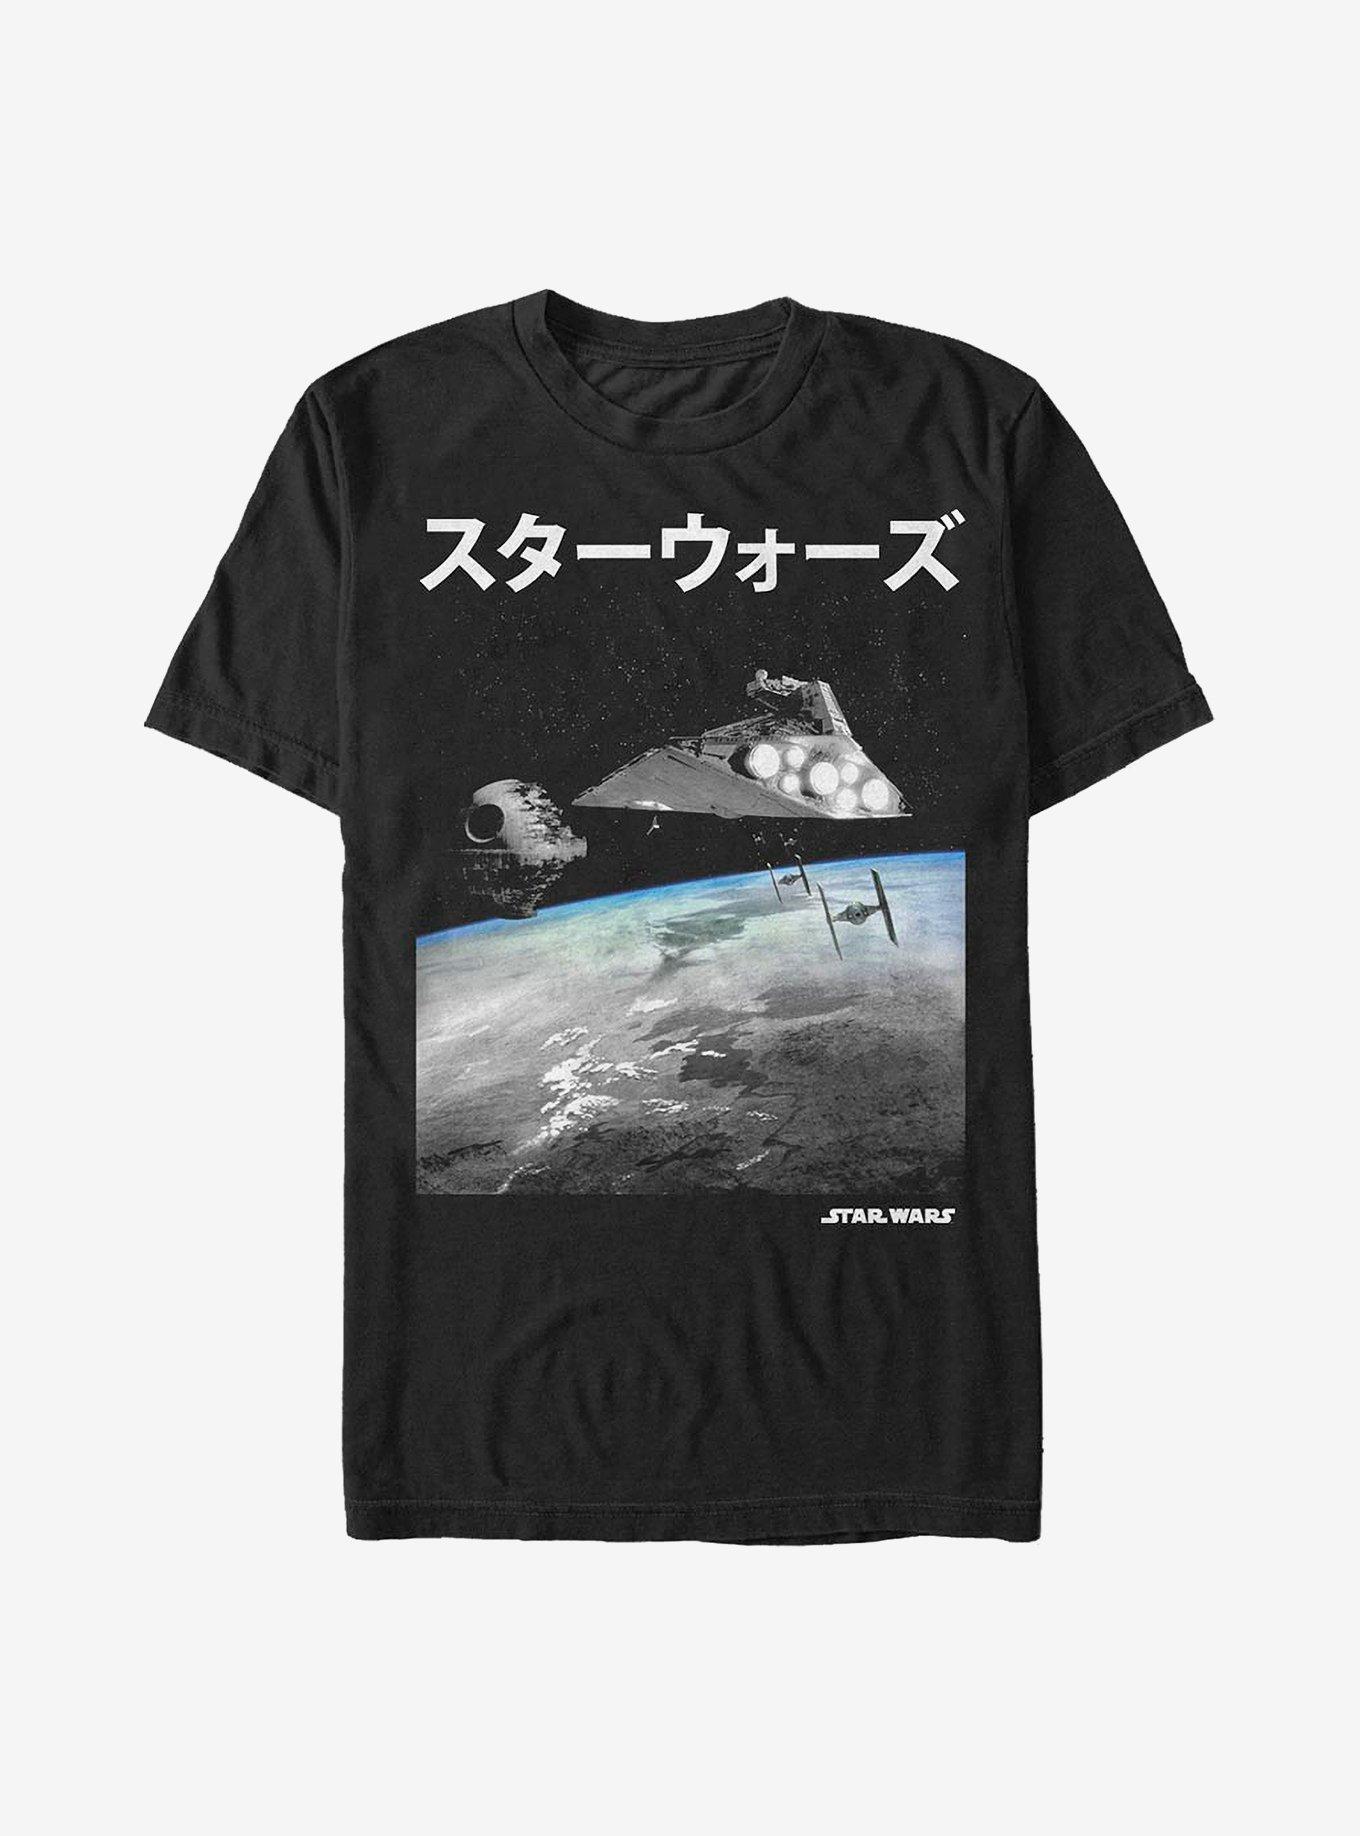 Star Wars Command Ships T-Shirt